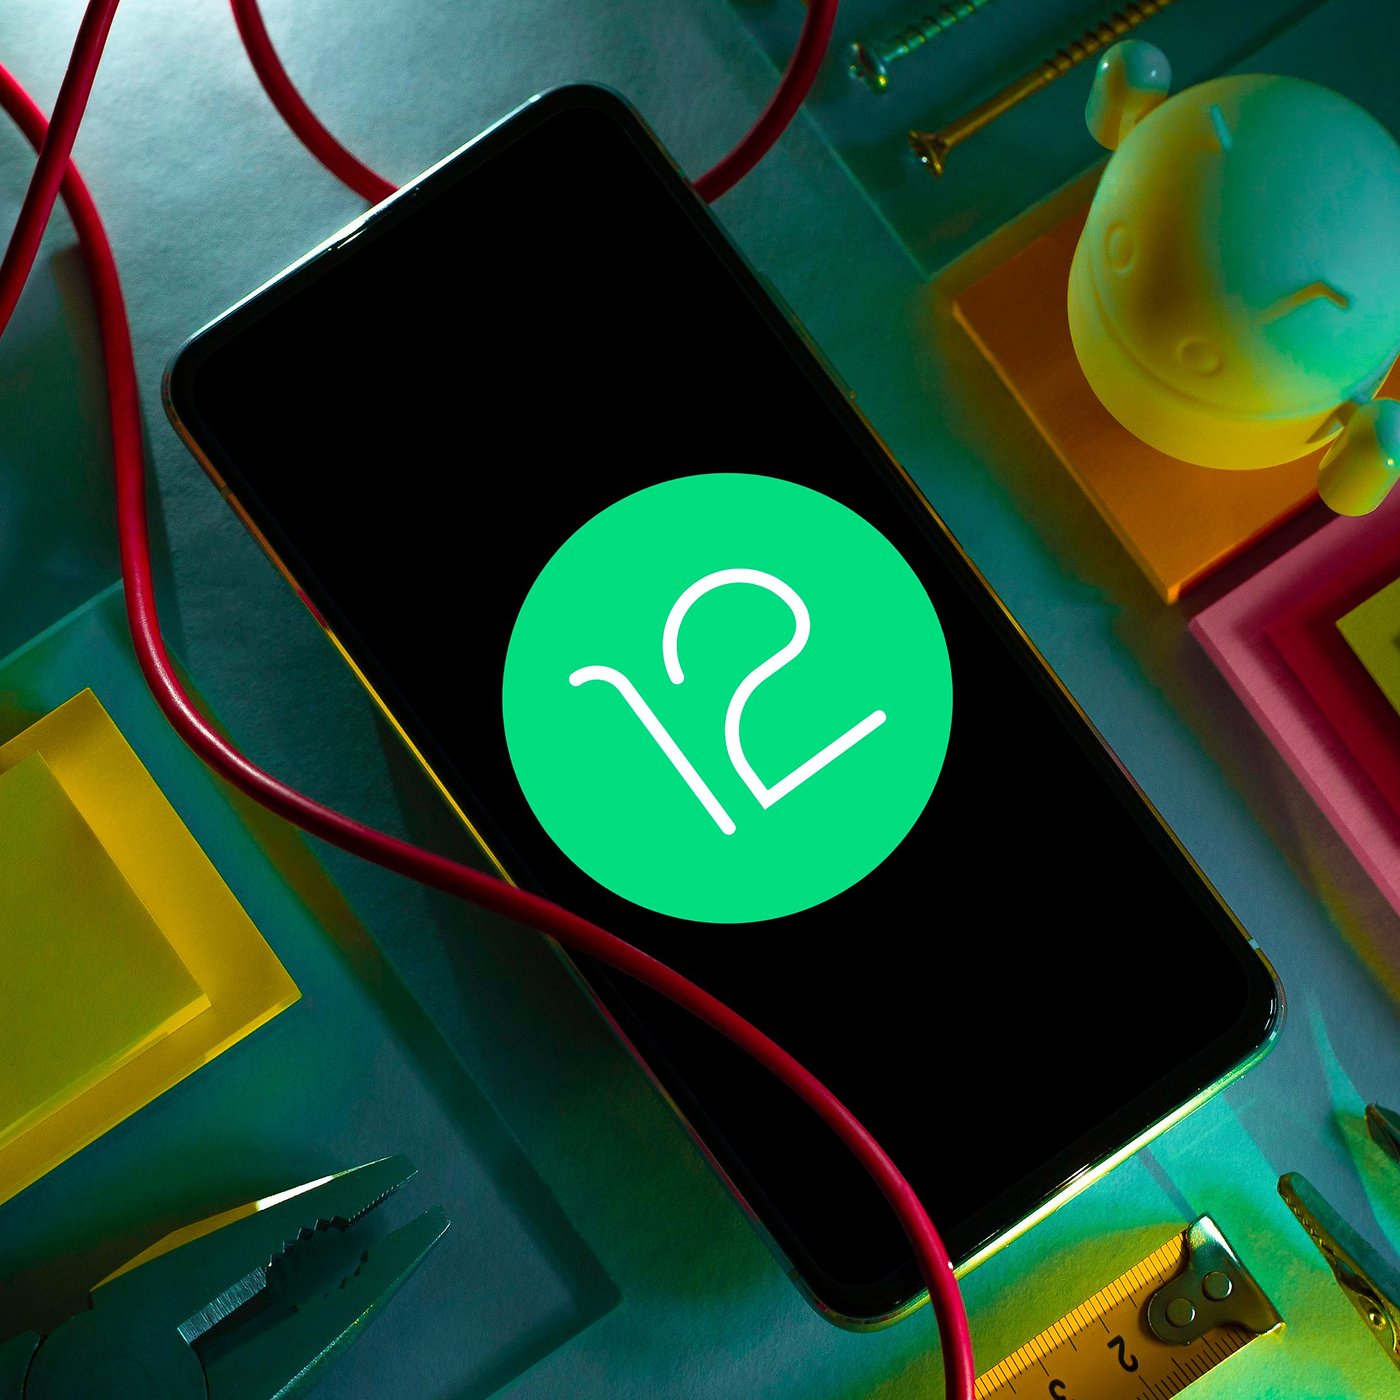 Android 12 Beta: aplicativo Relógio é atualizado e exibe interface baseada  no Material You 